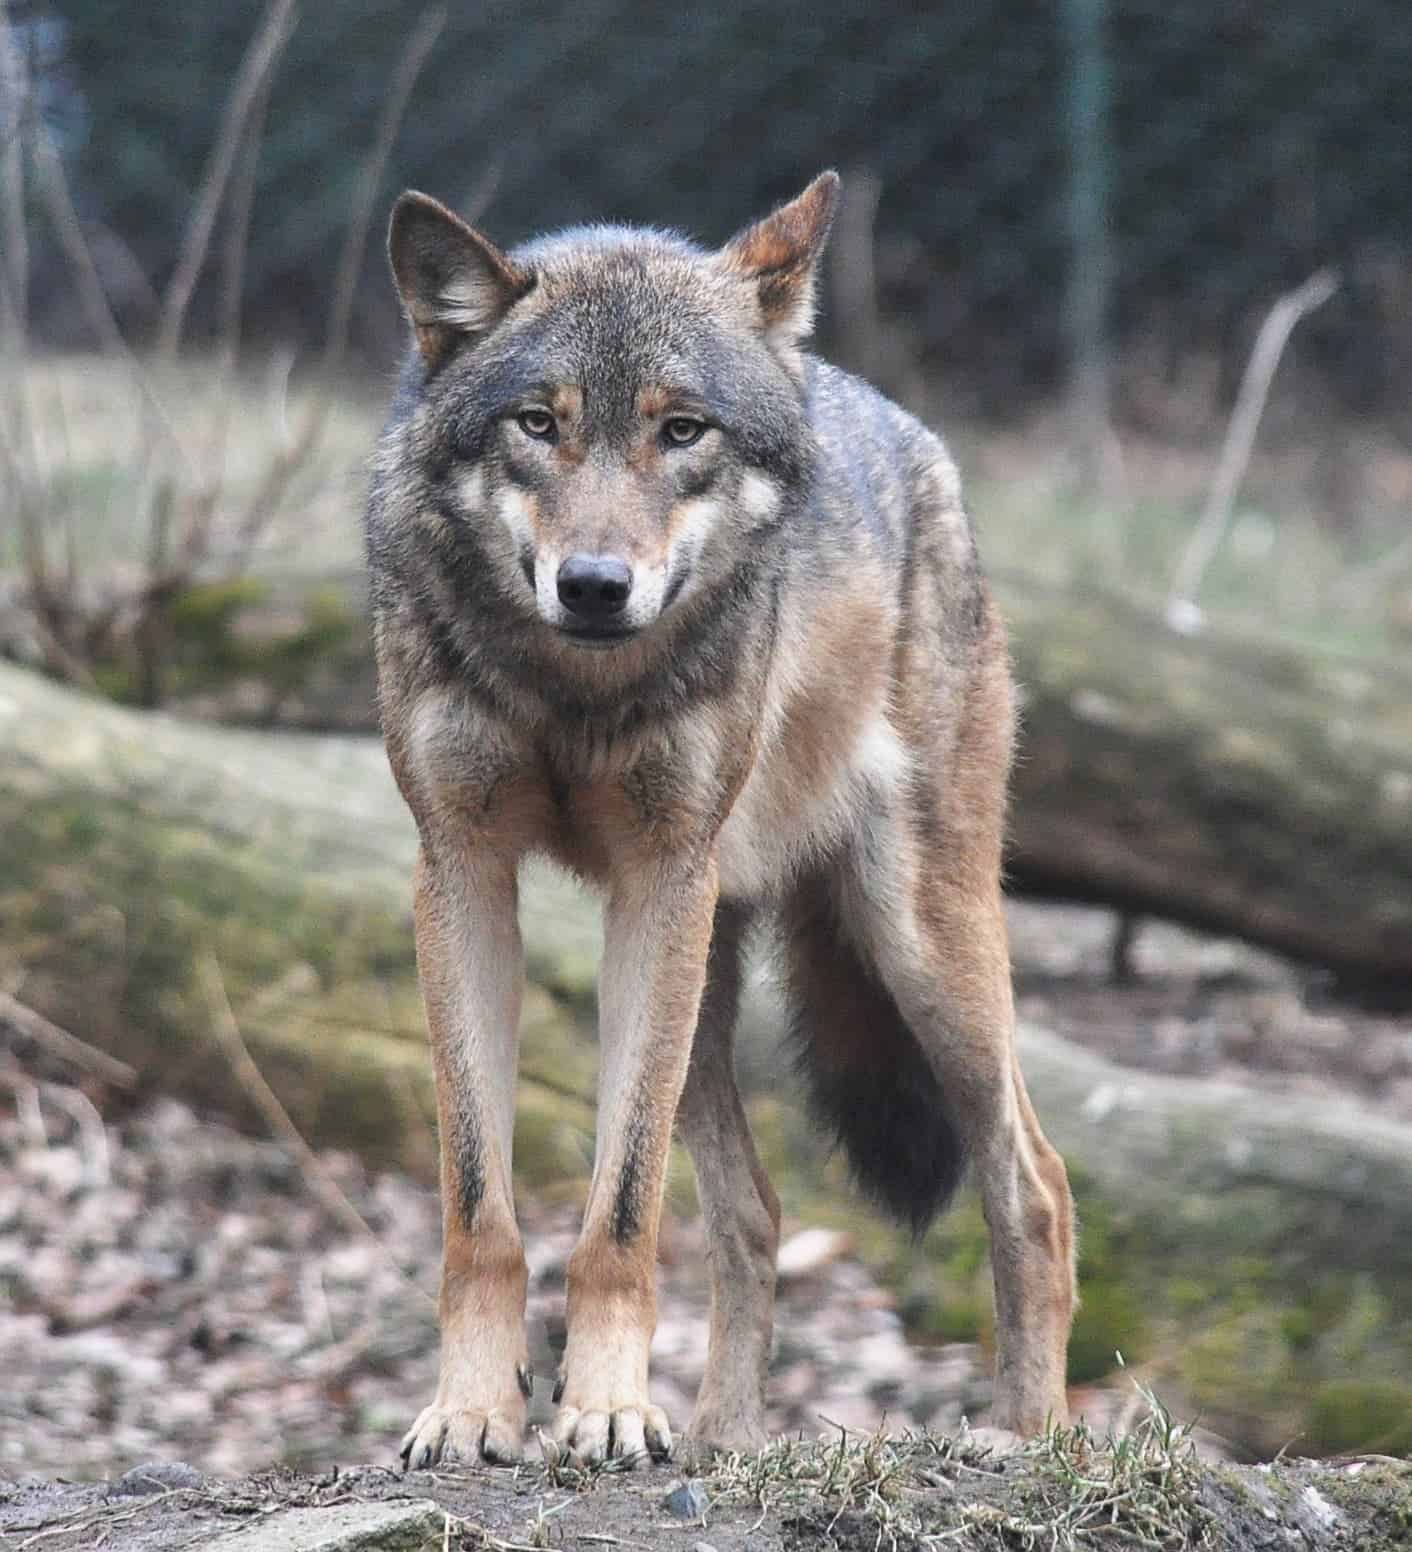 A European grey wolf. Image credits: Katerina Hlavata.